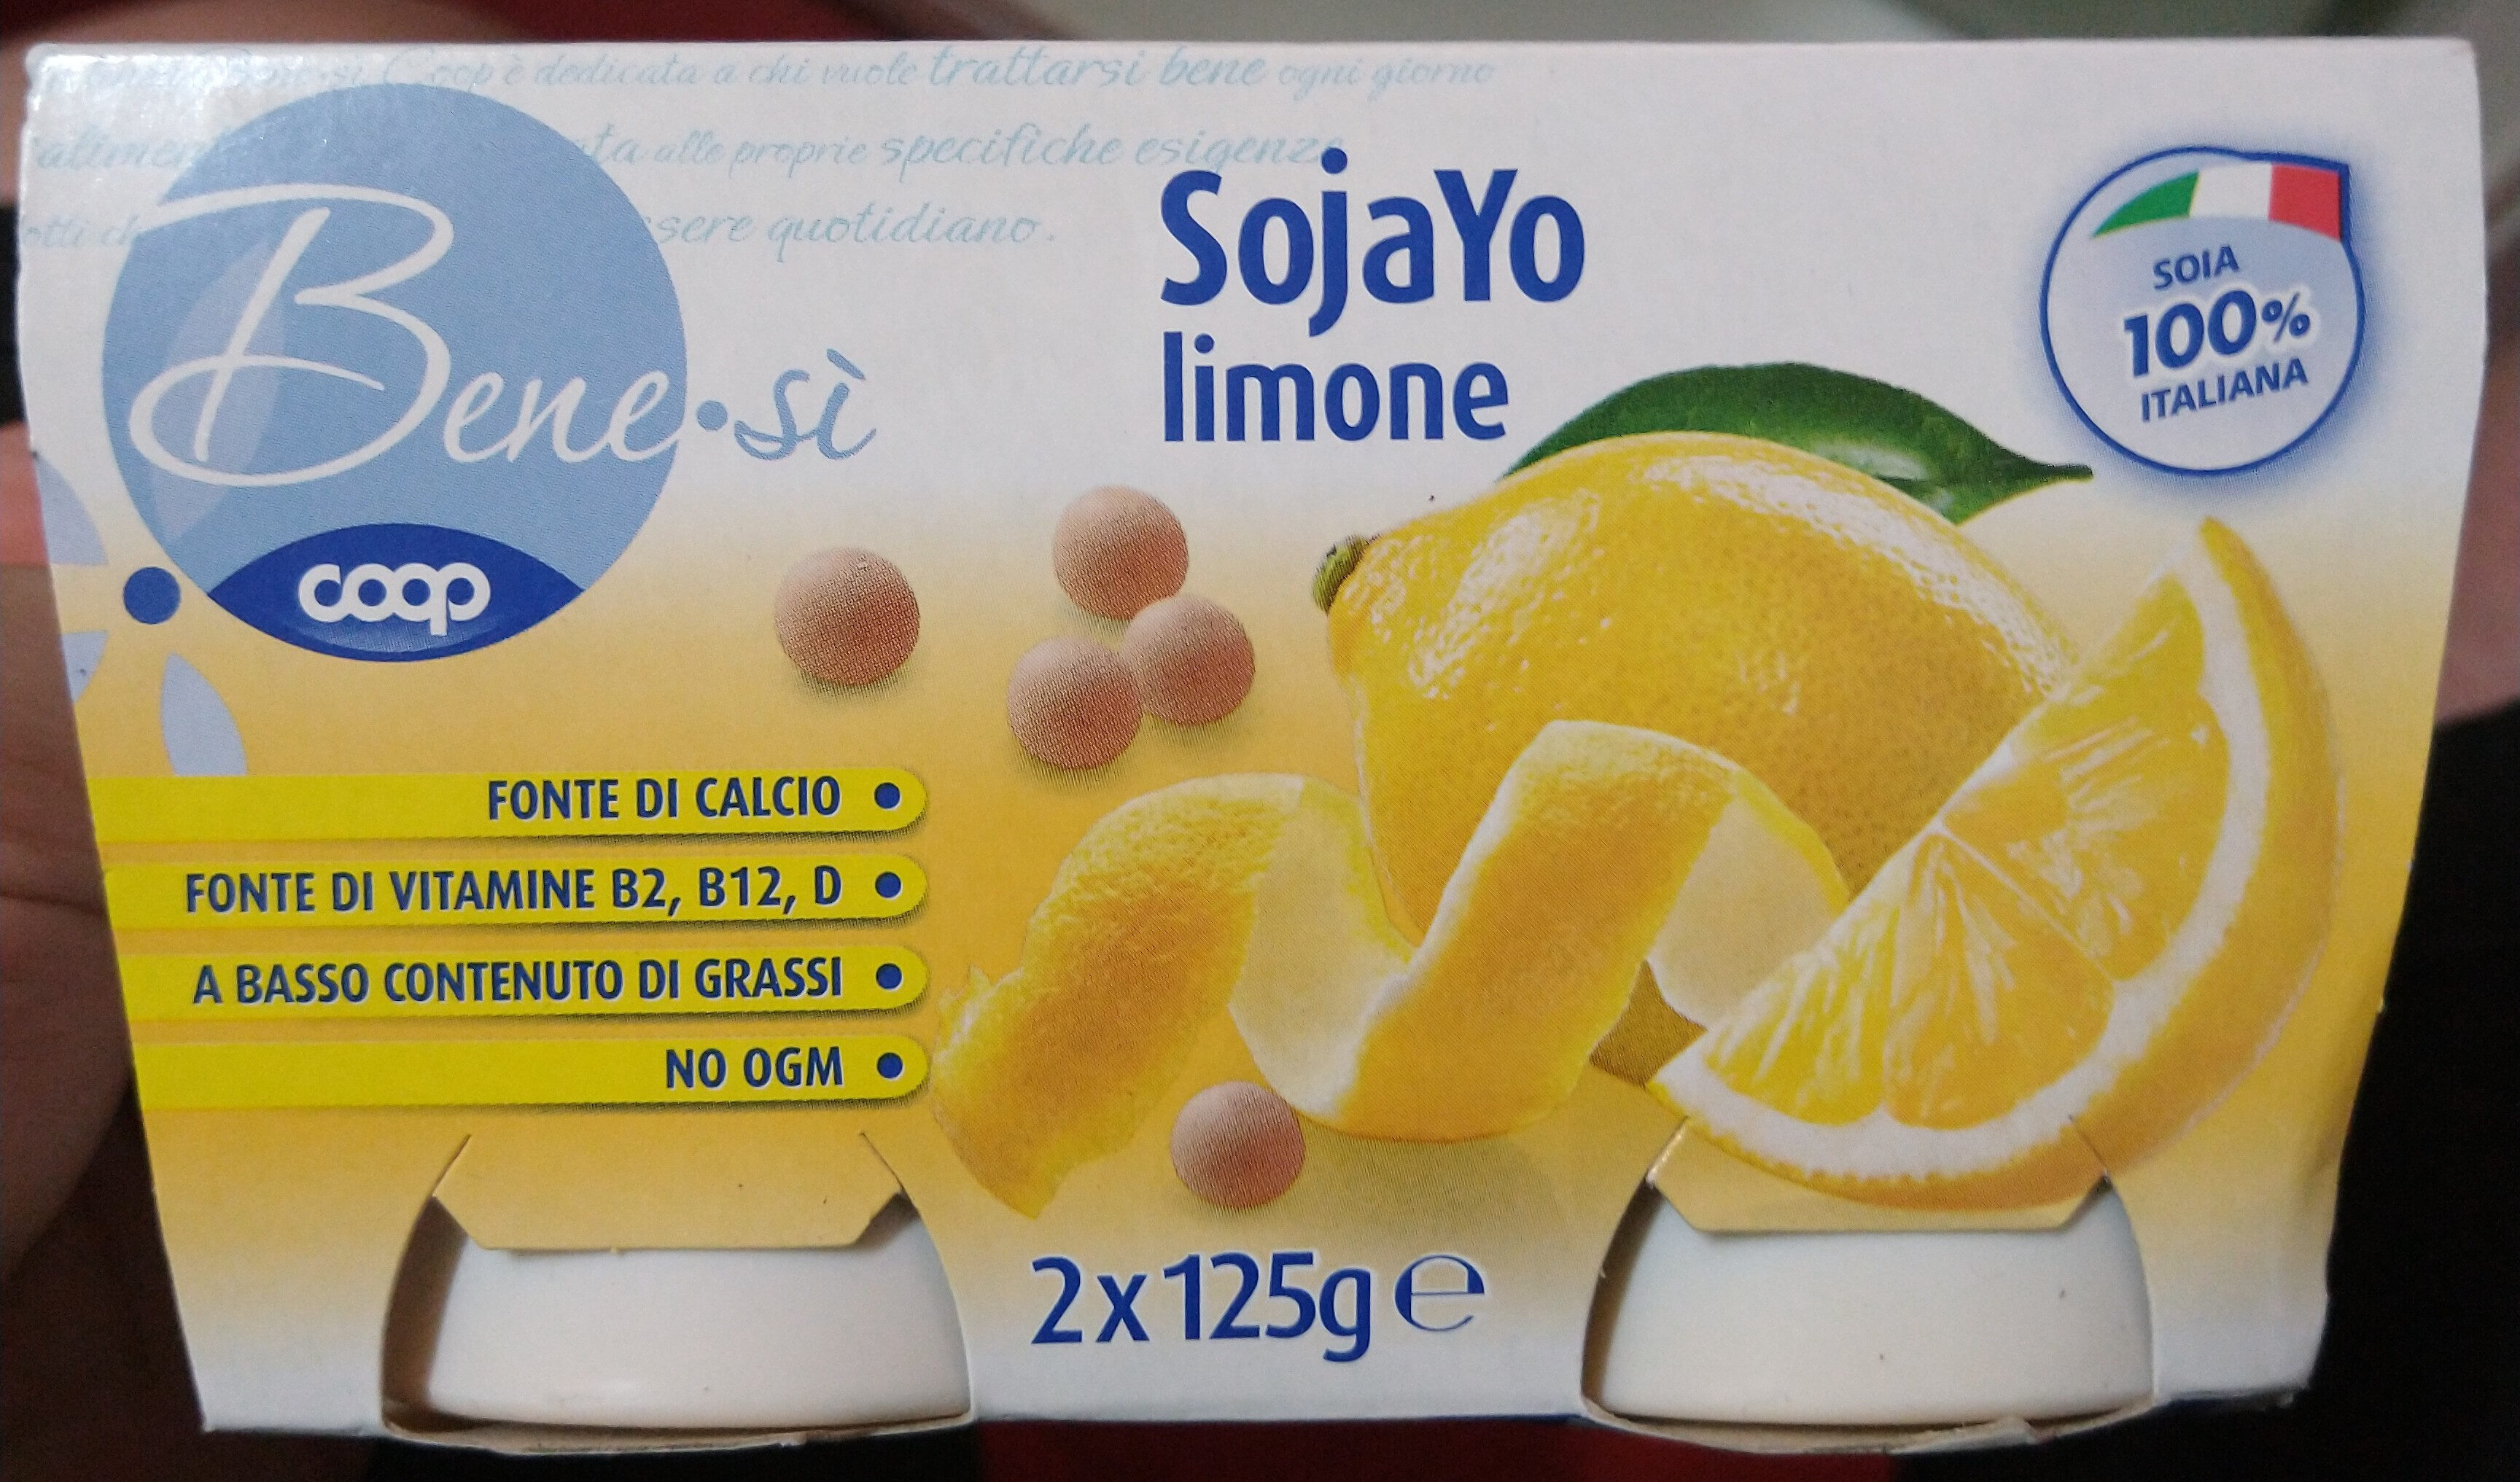 SojaYo limone - Bene Sì - Prodotto